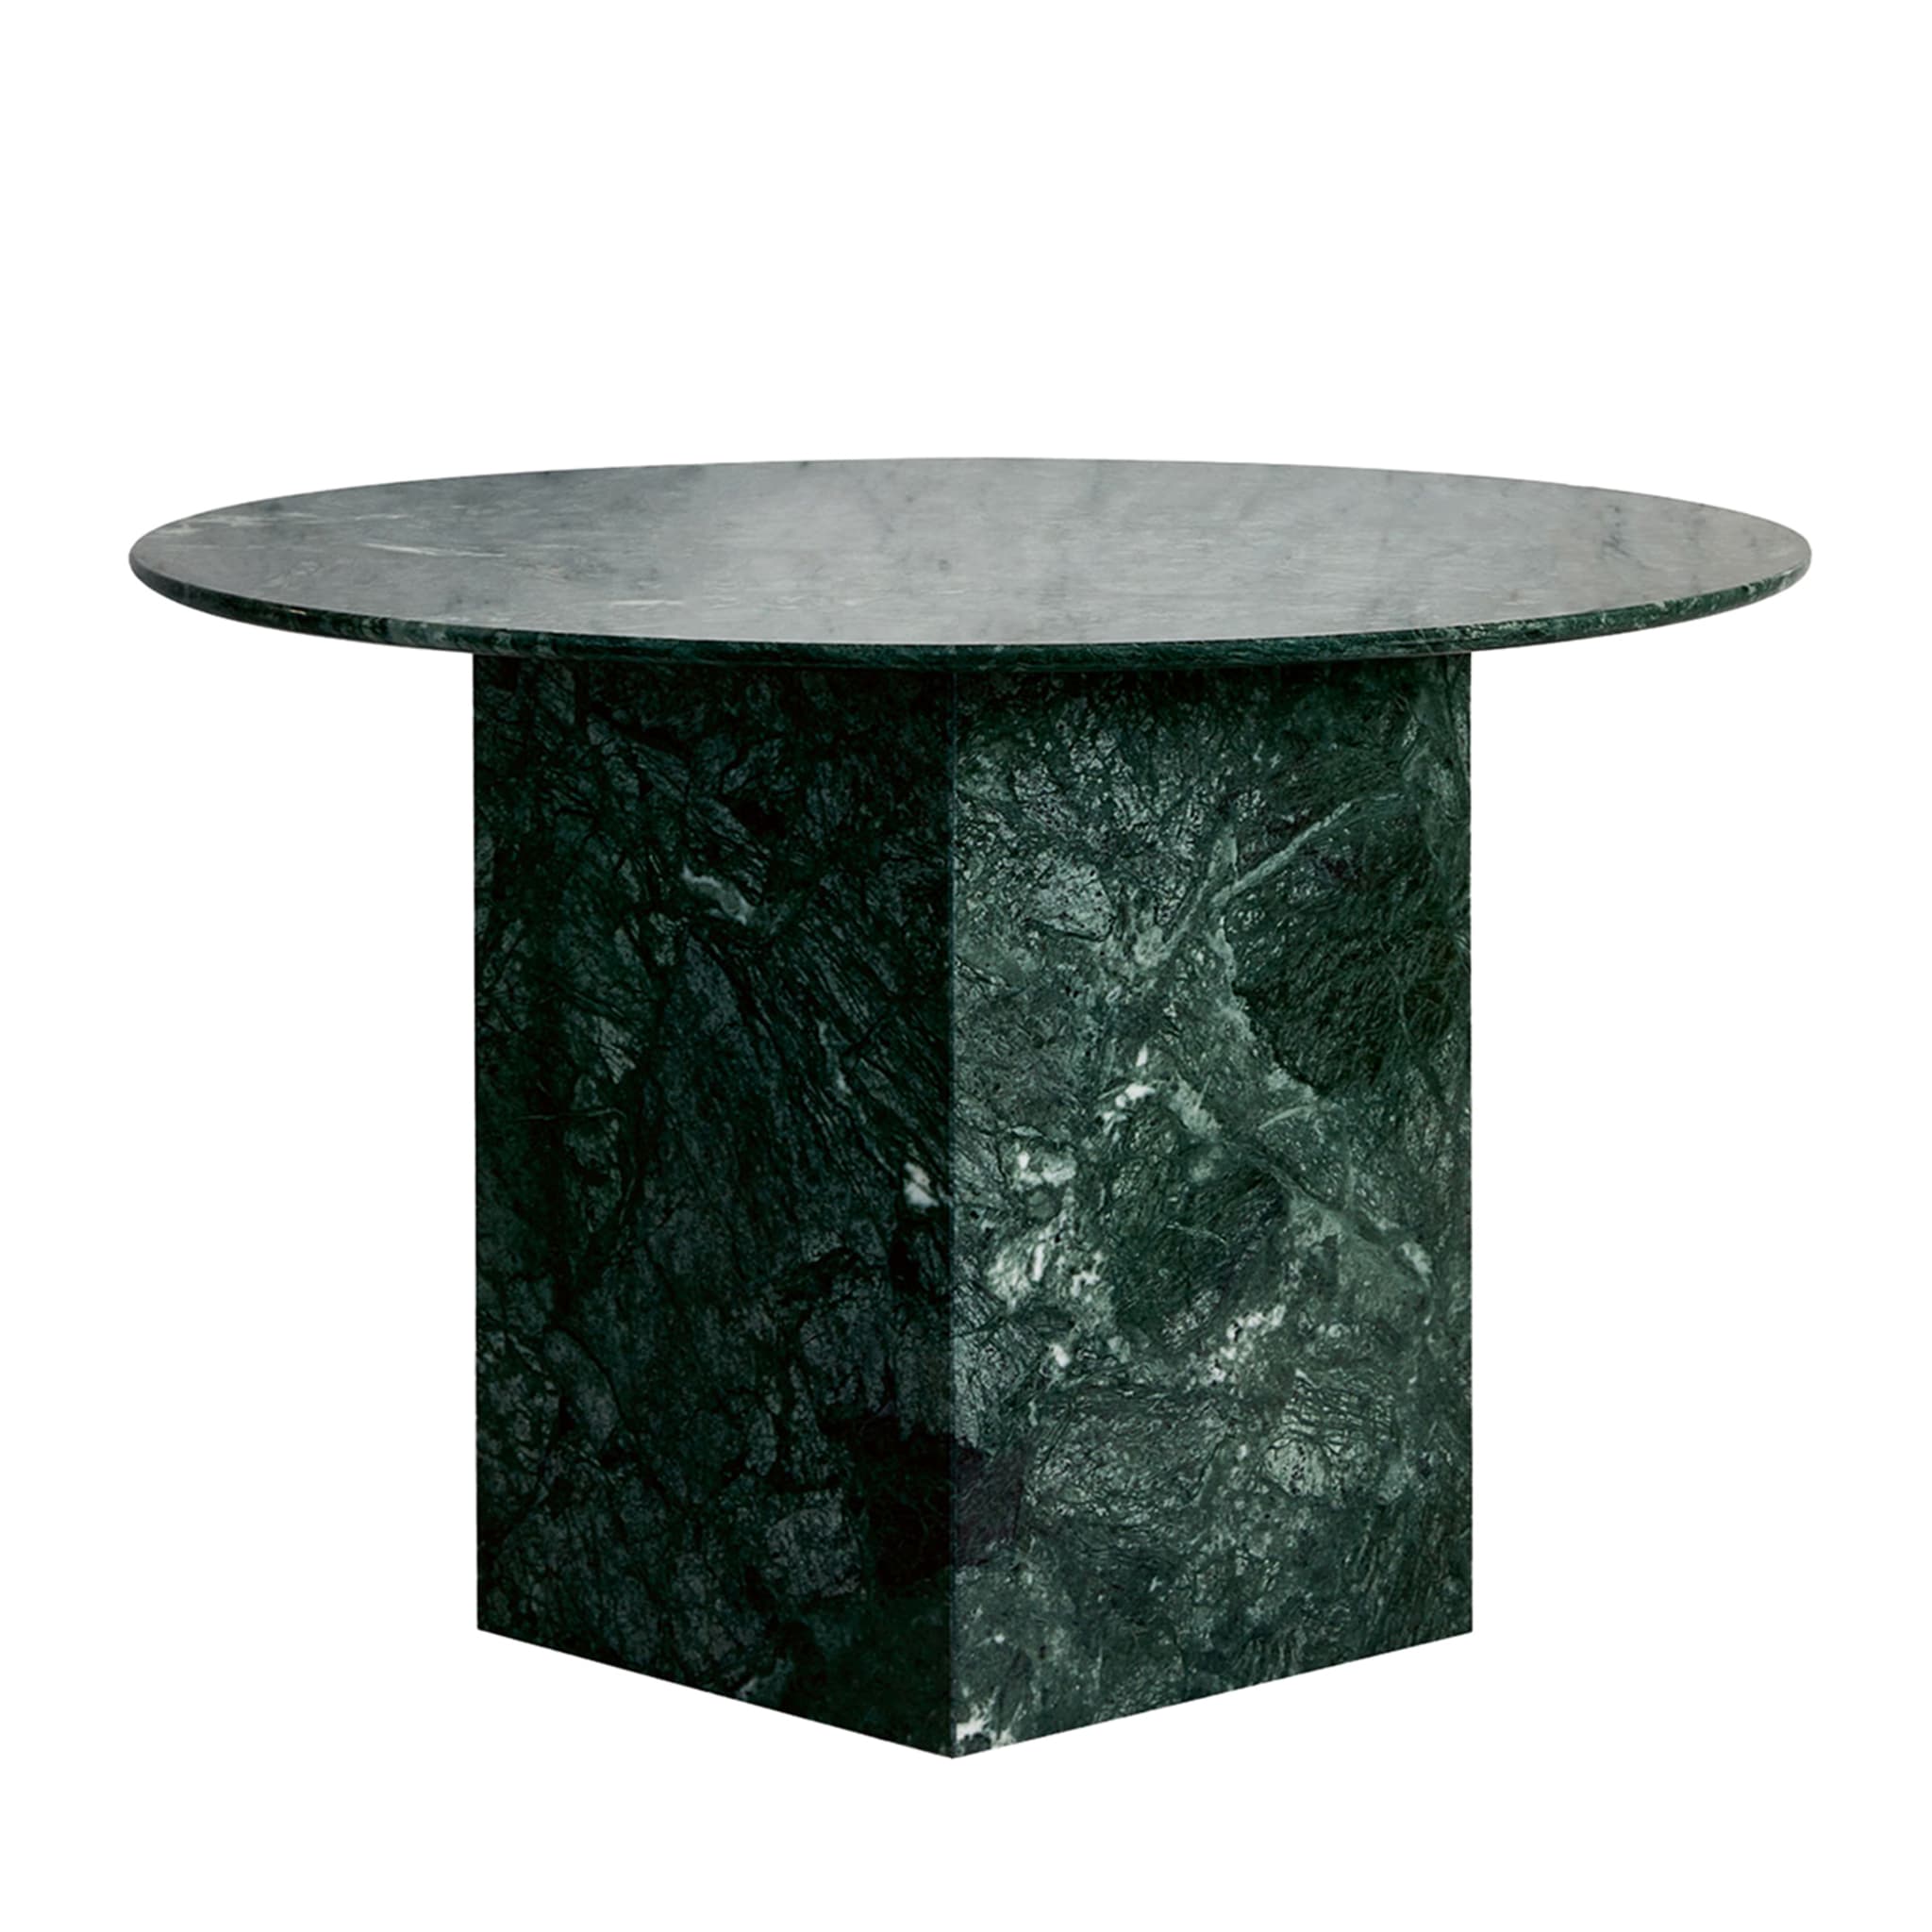 Badisco Side Table by Claesson Koivisto Rune - Main view